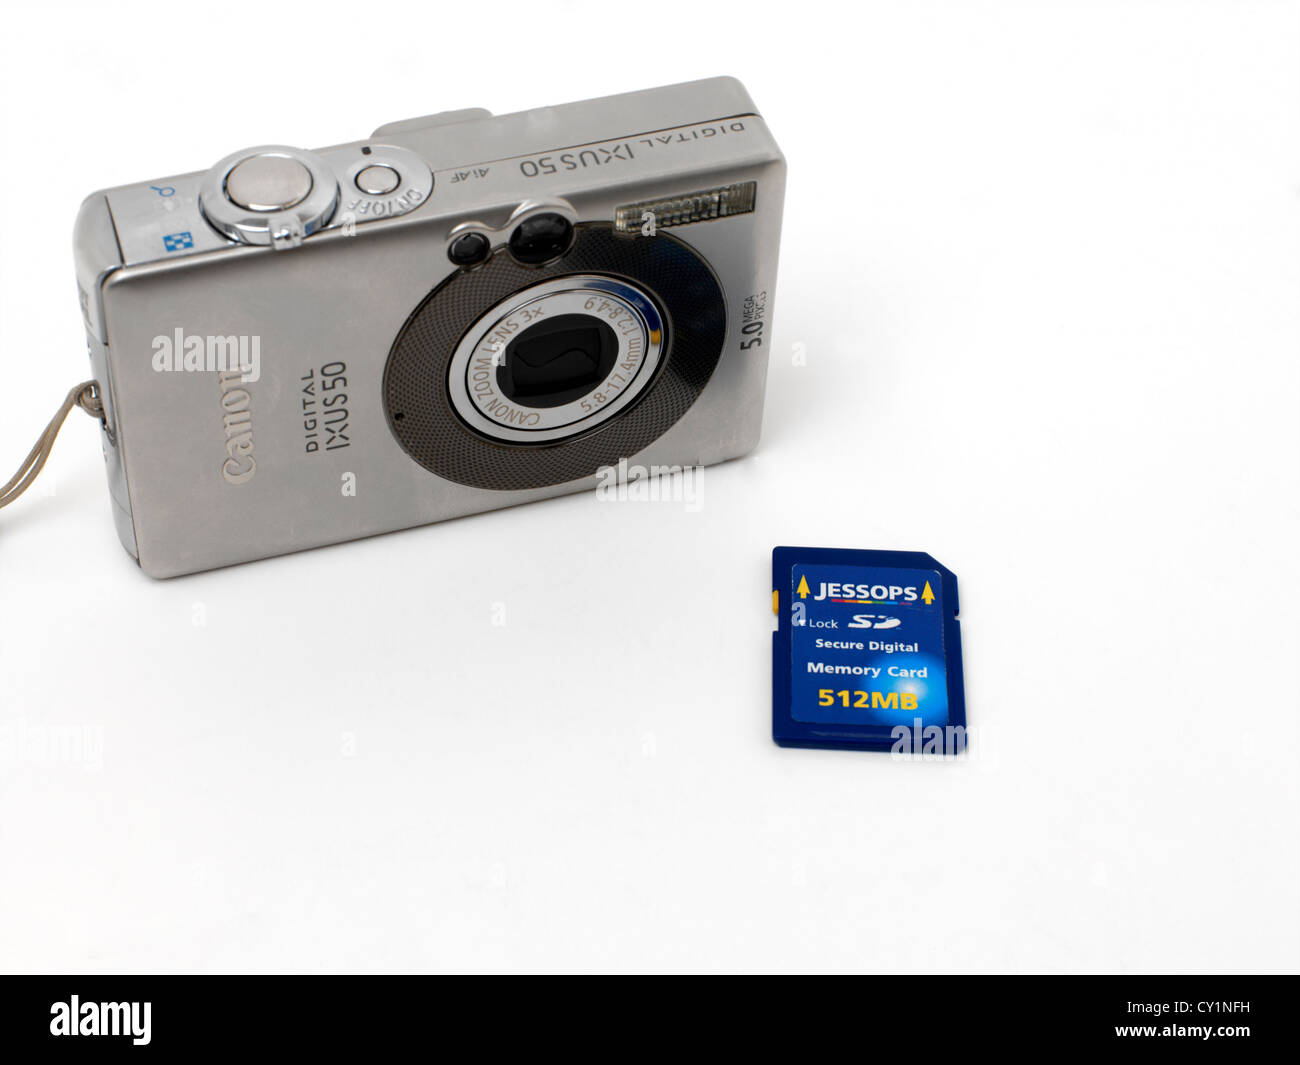 Canon Ixus 50 Digital Camera with Secure Digital Memory Card 512mb Stock Photo